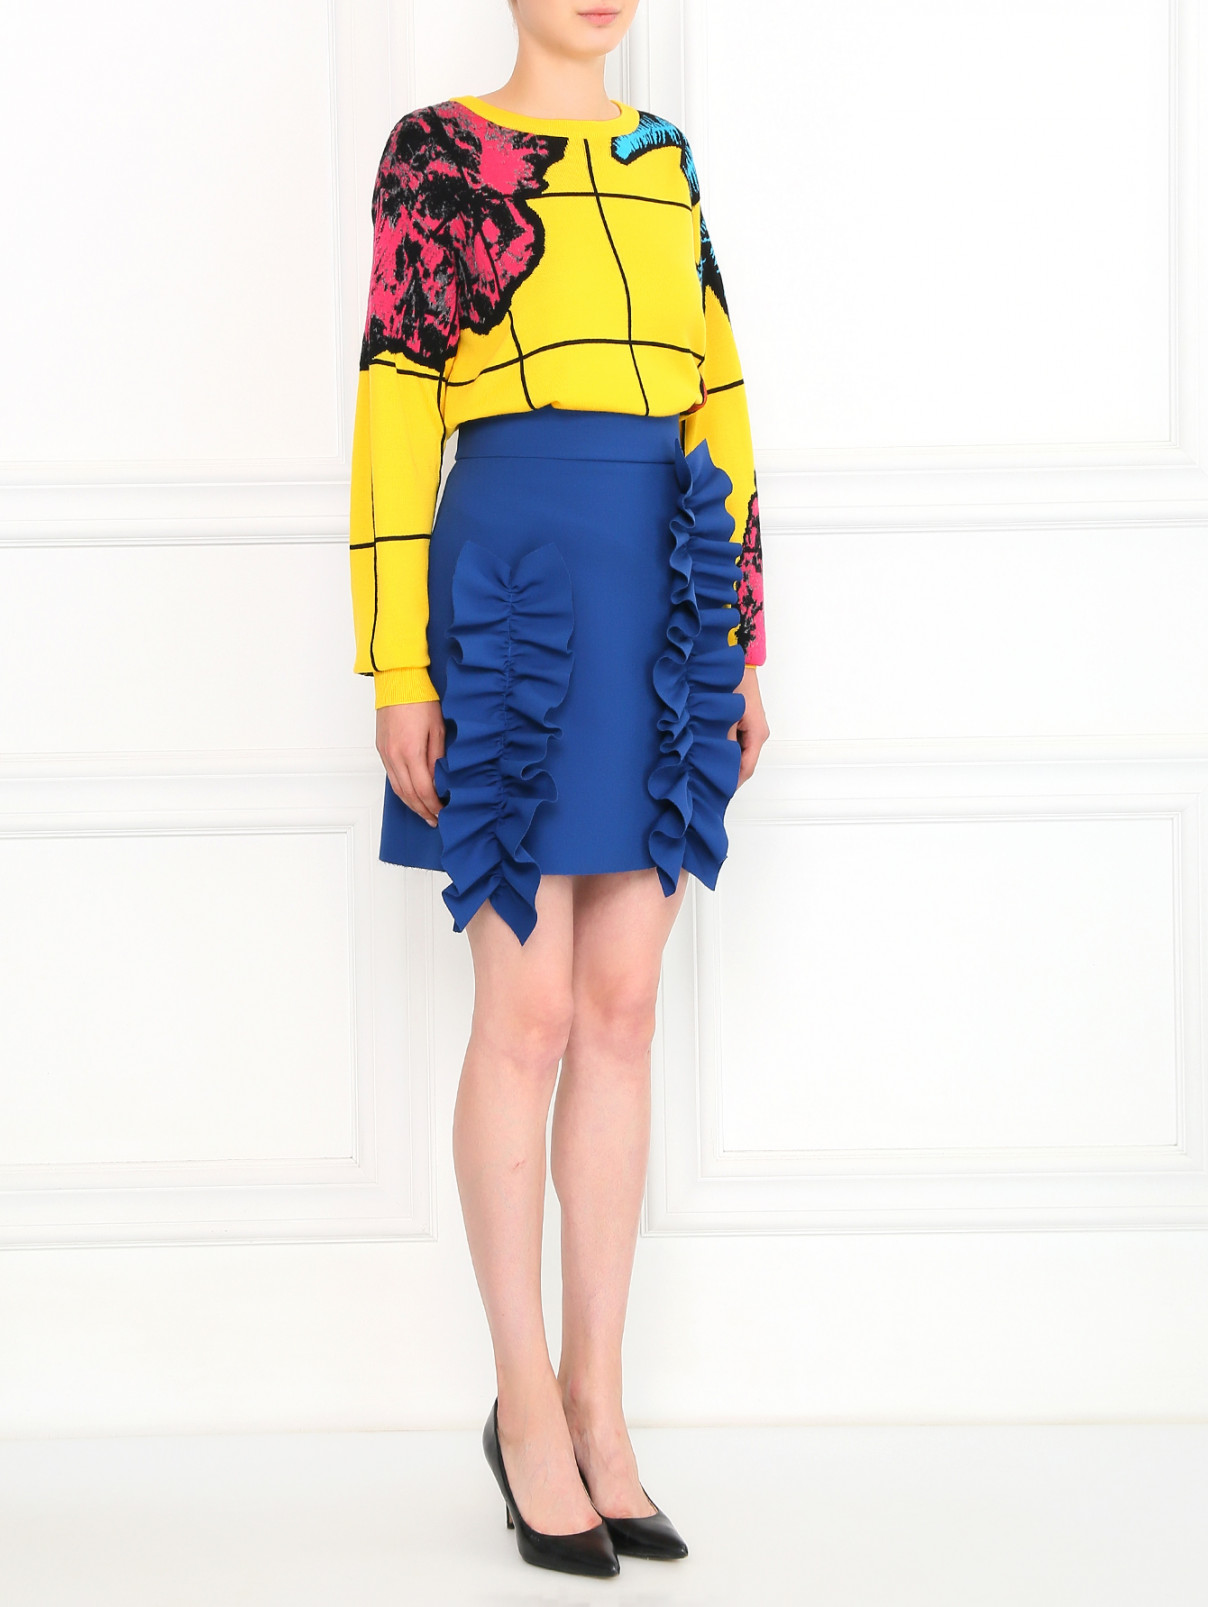 Джемпер из шерсти с узором Moschino Couture  –  Модель Общий вид  – Цвет:  Желтый